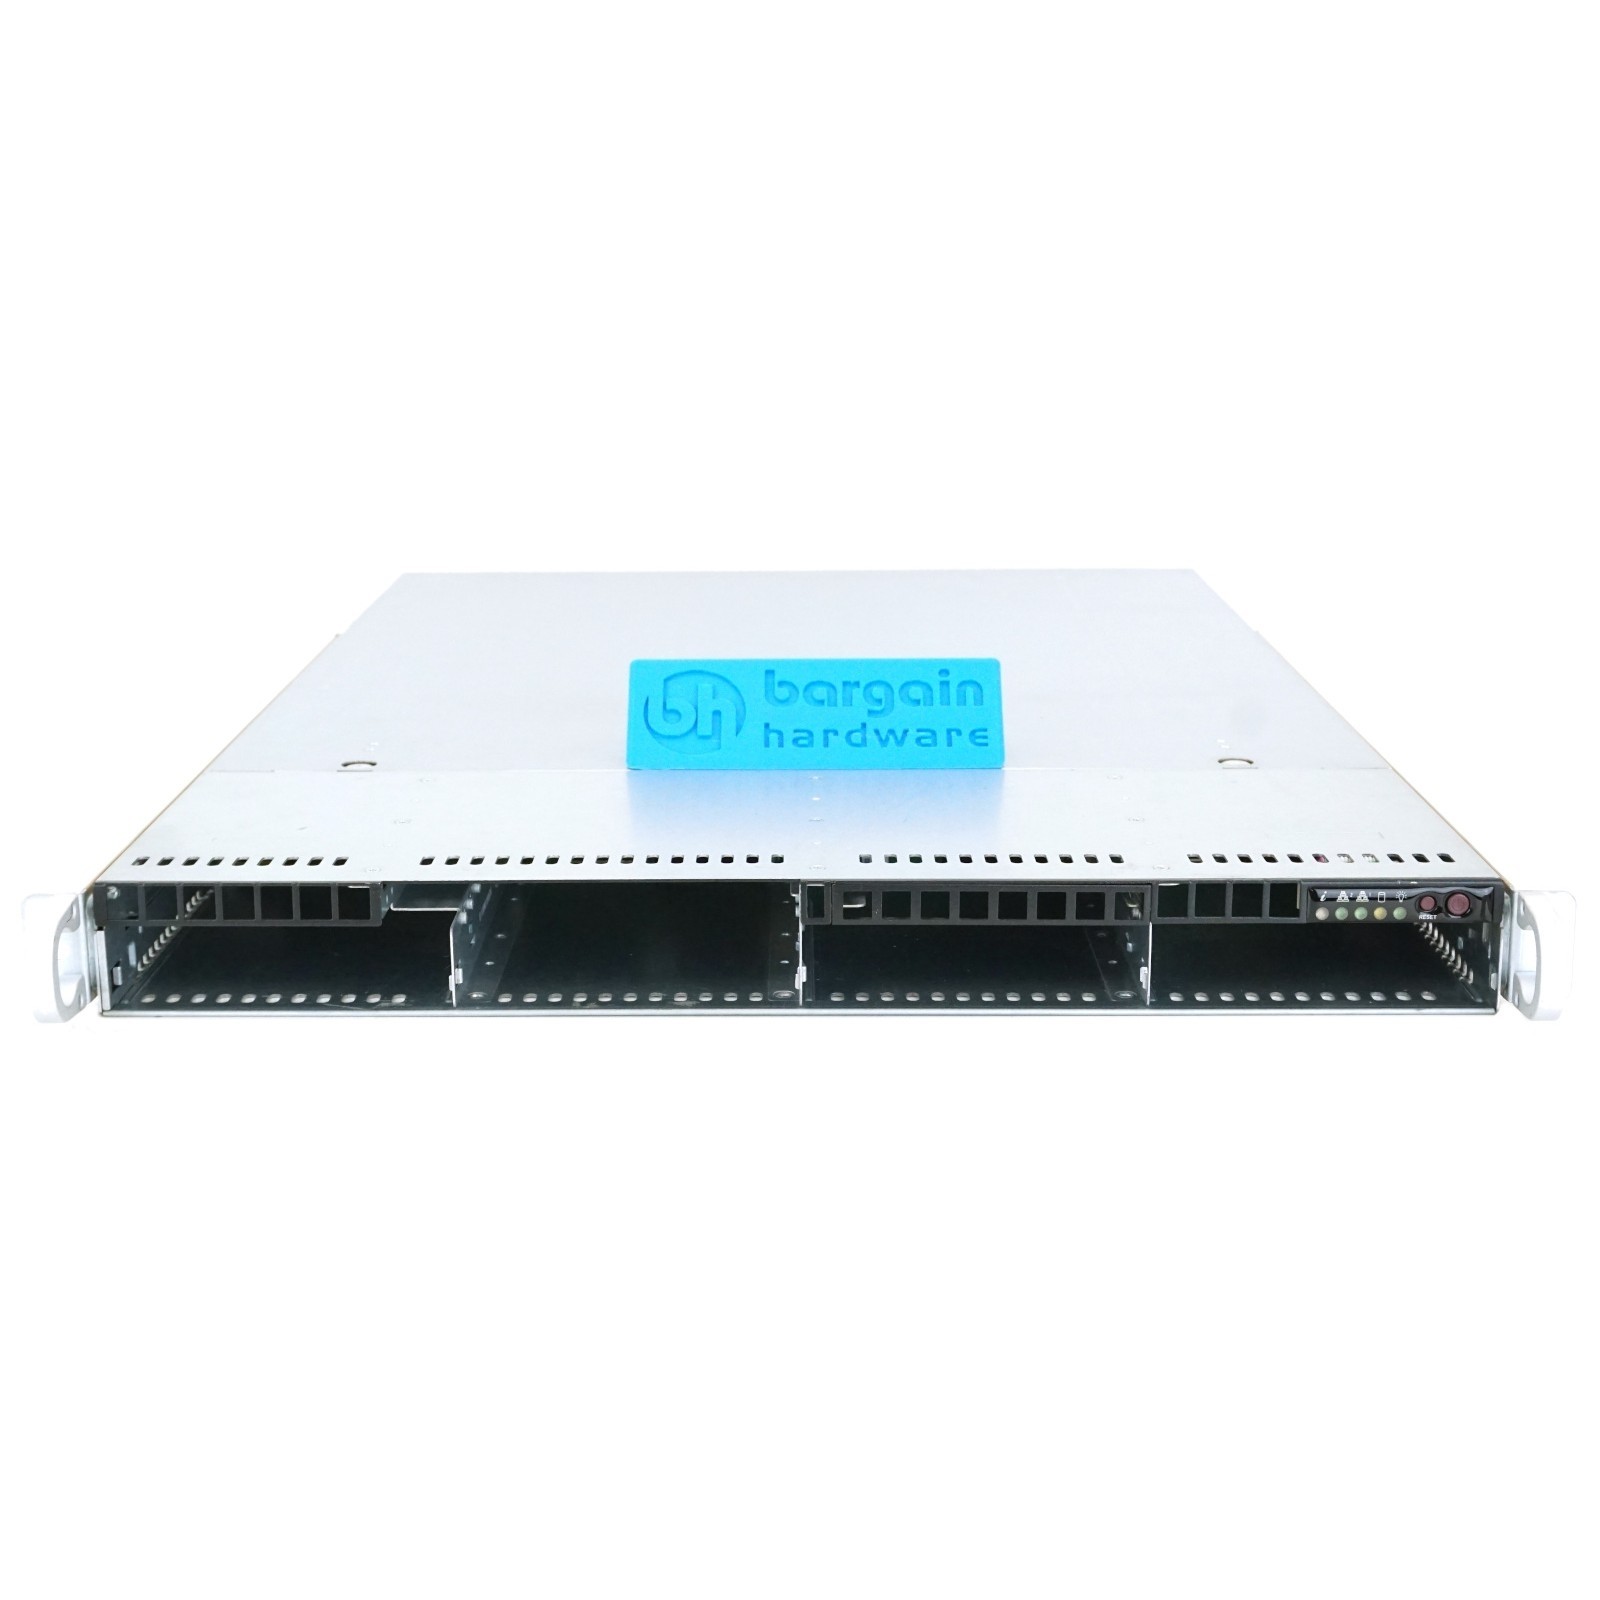 SuperMicro CSE-815 X8DTU-F 1U Rackmount Server | Configure-to-Order